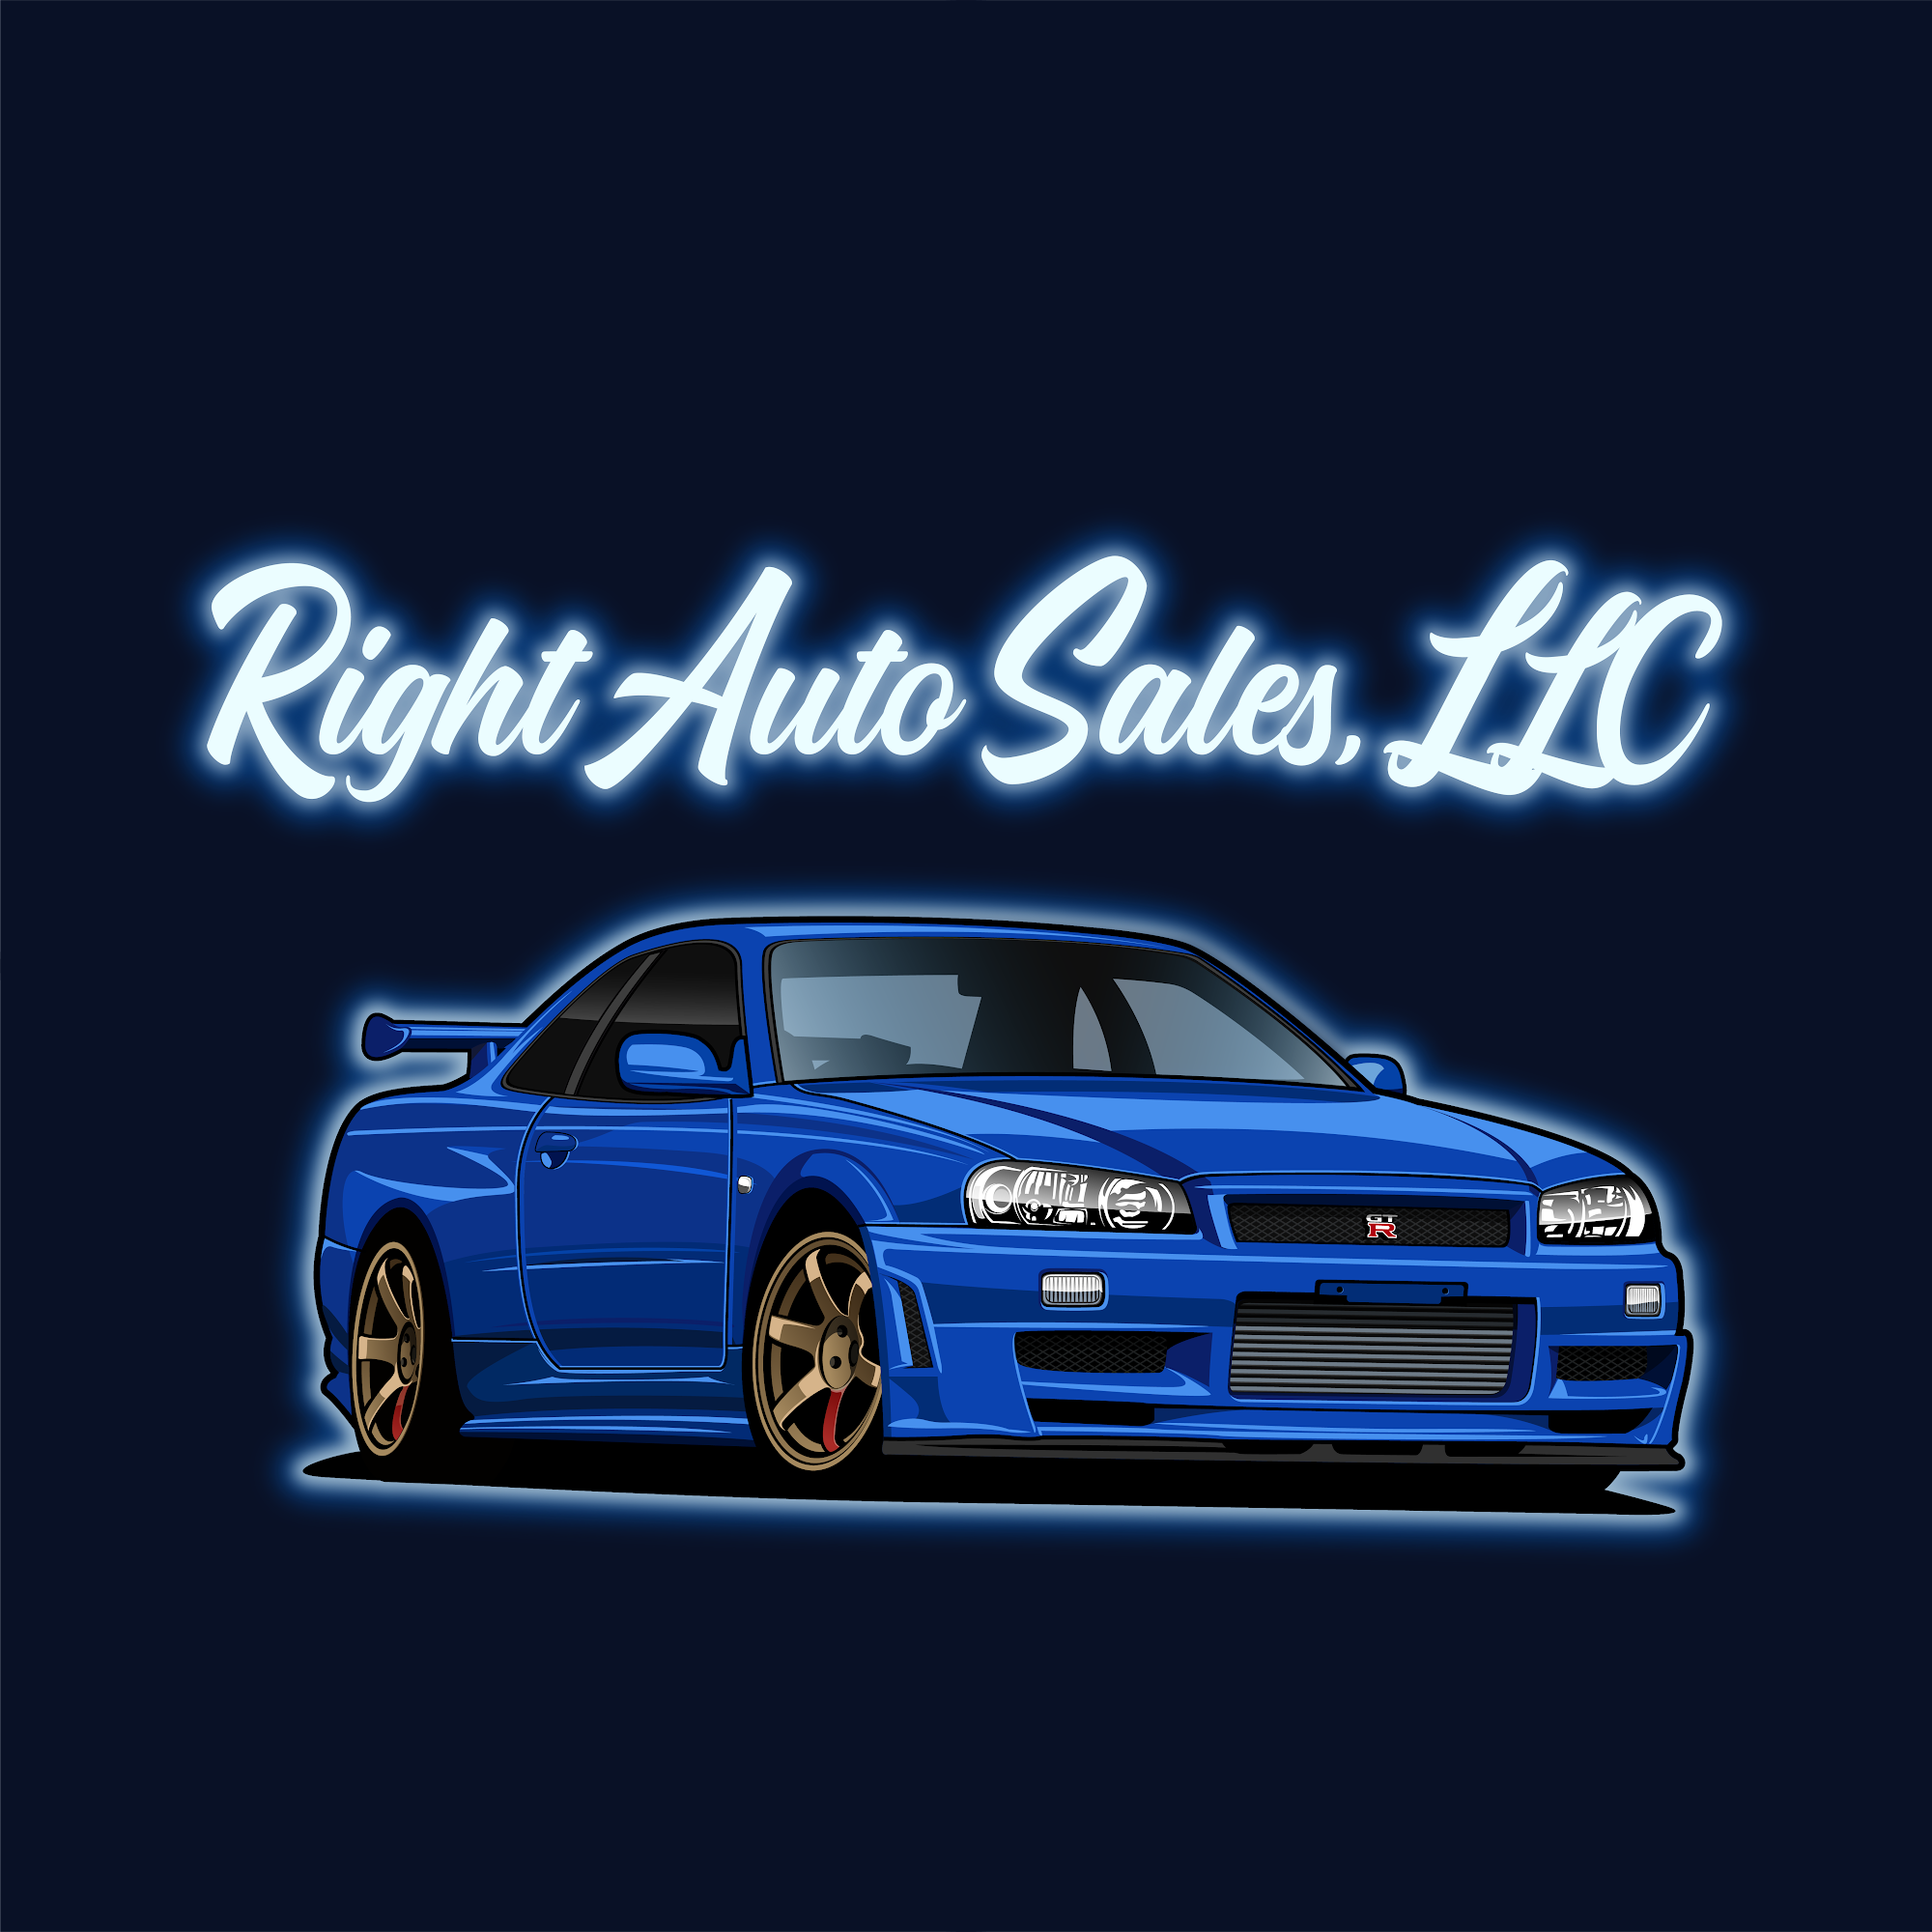 Right Auto Sales, LLC